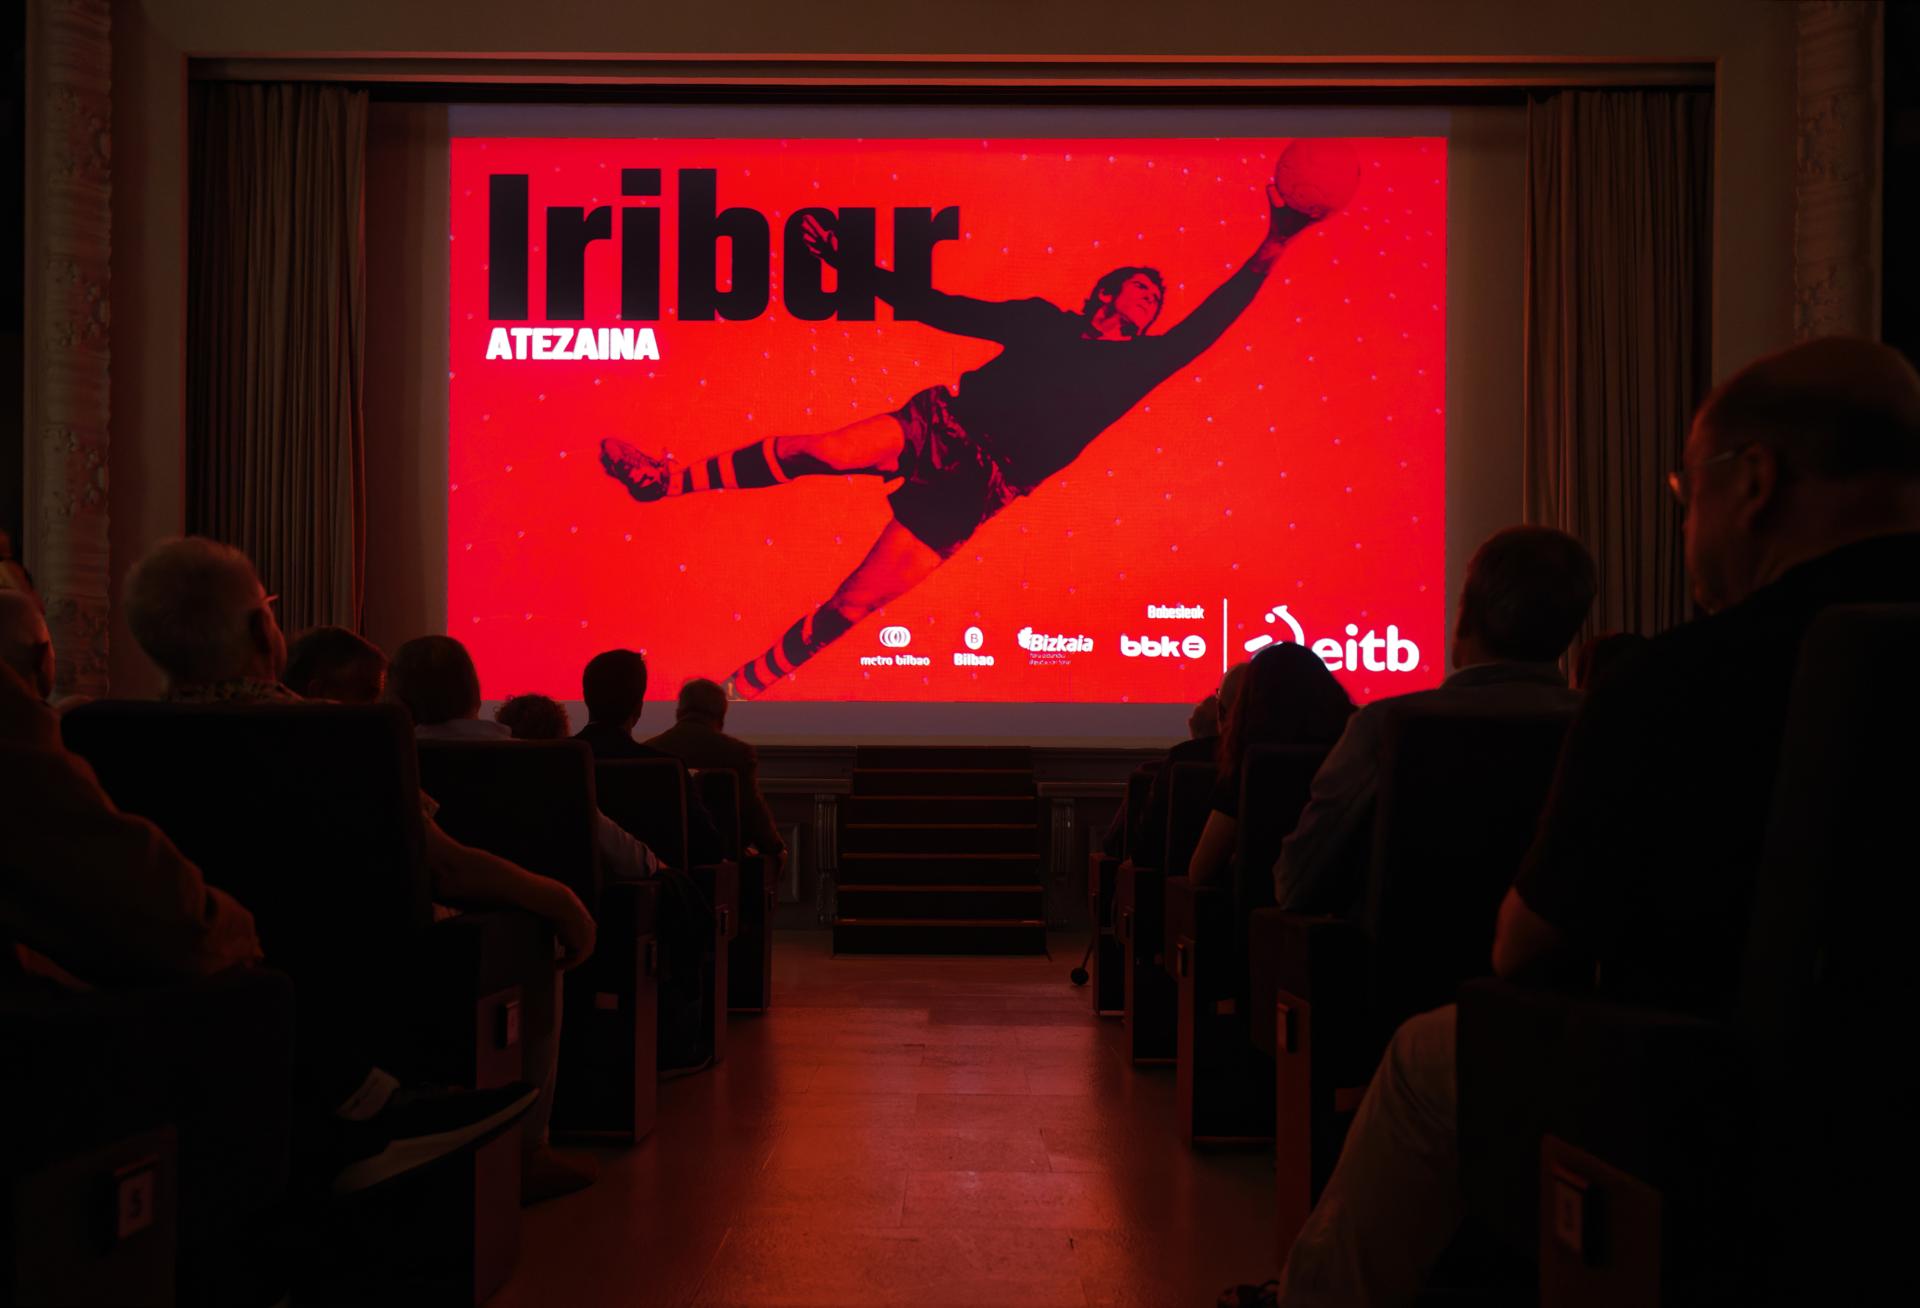 "Iribar, atezaina" documentary premiere in Bilbao